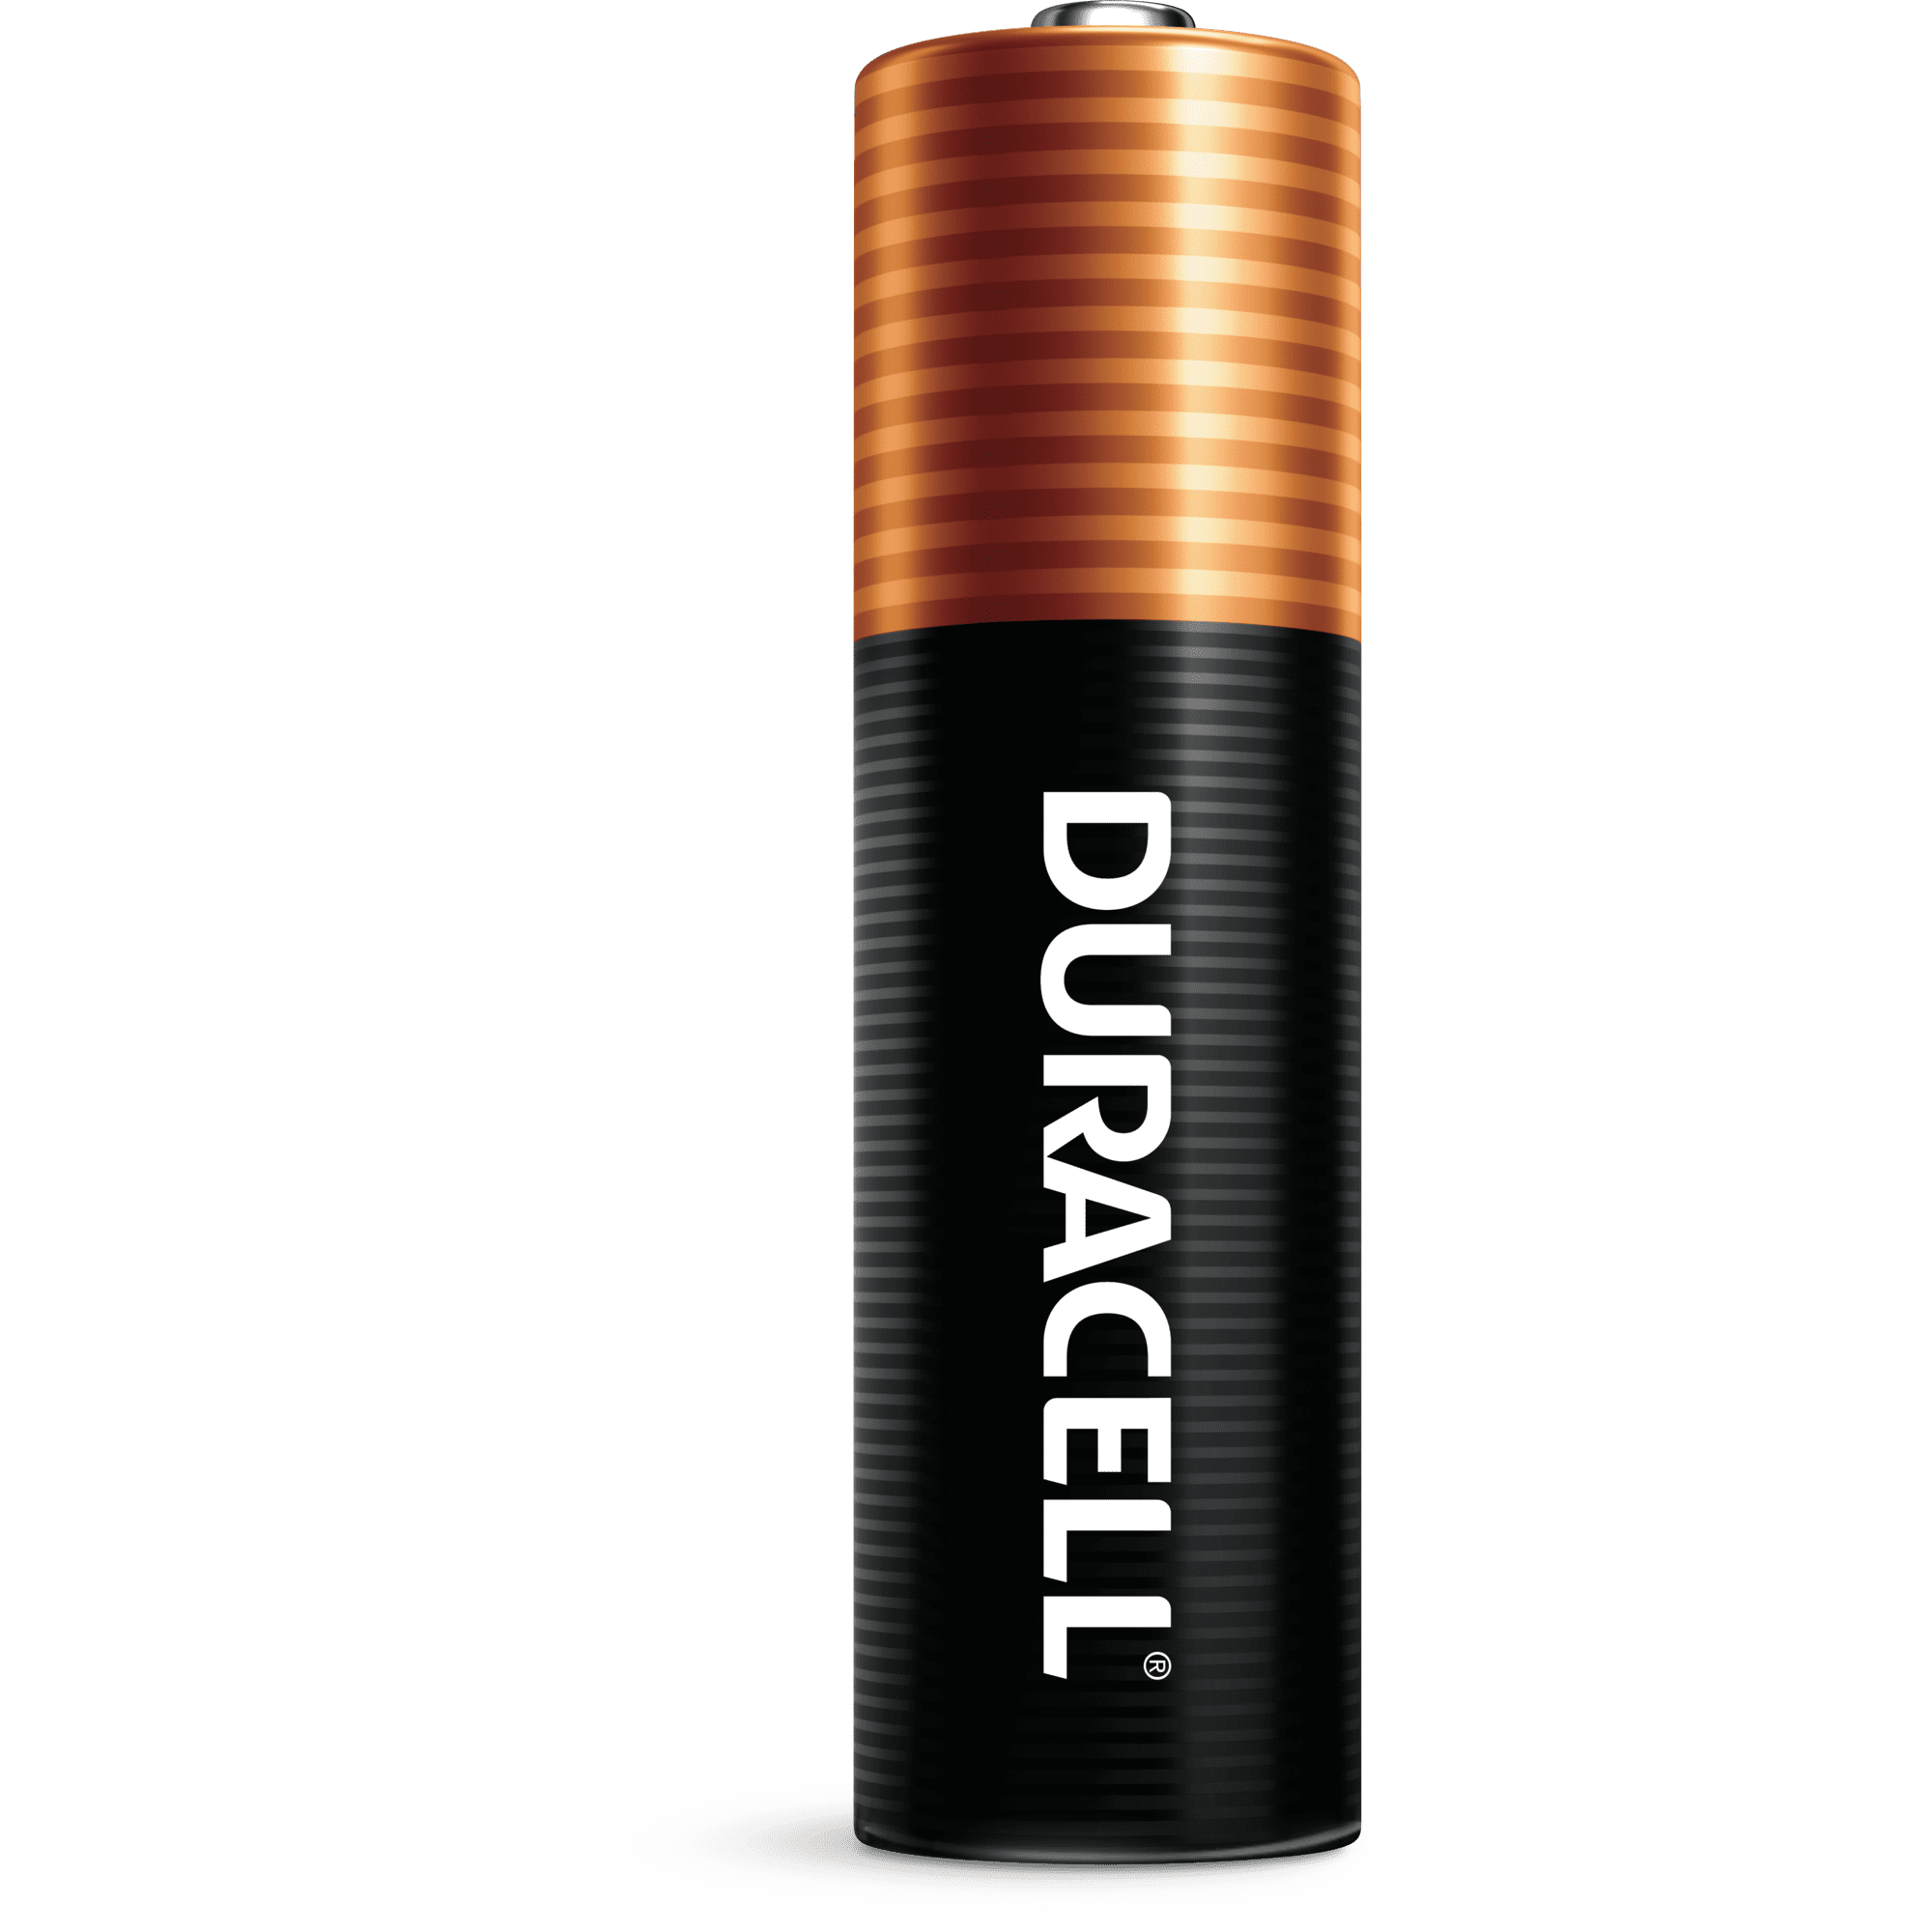 AA-batterier 16-pk, Duracell Simply